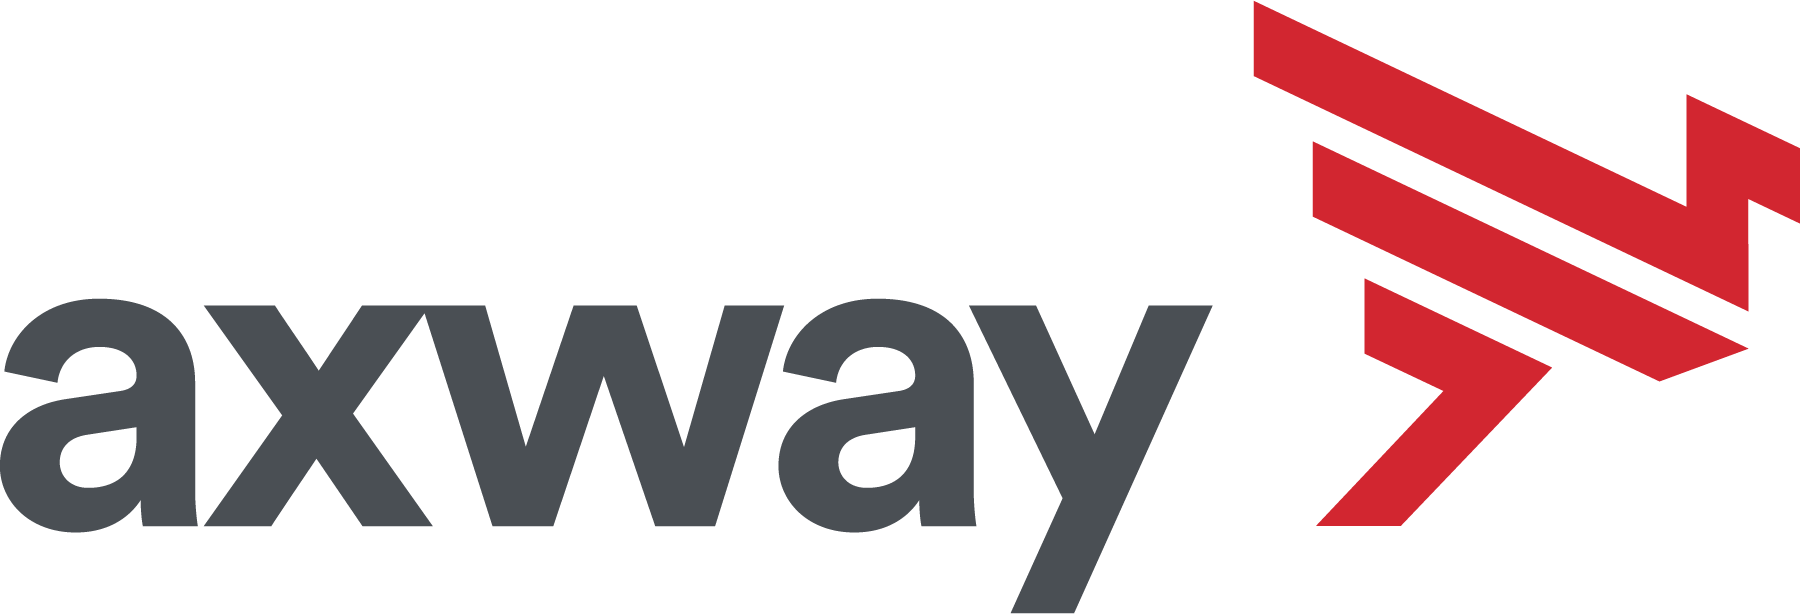 Axway_logo_horiz_gray_red_rgb